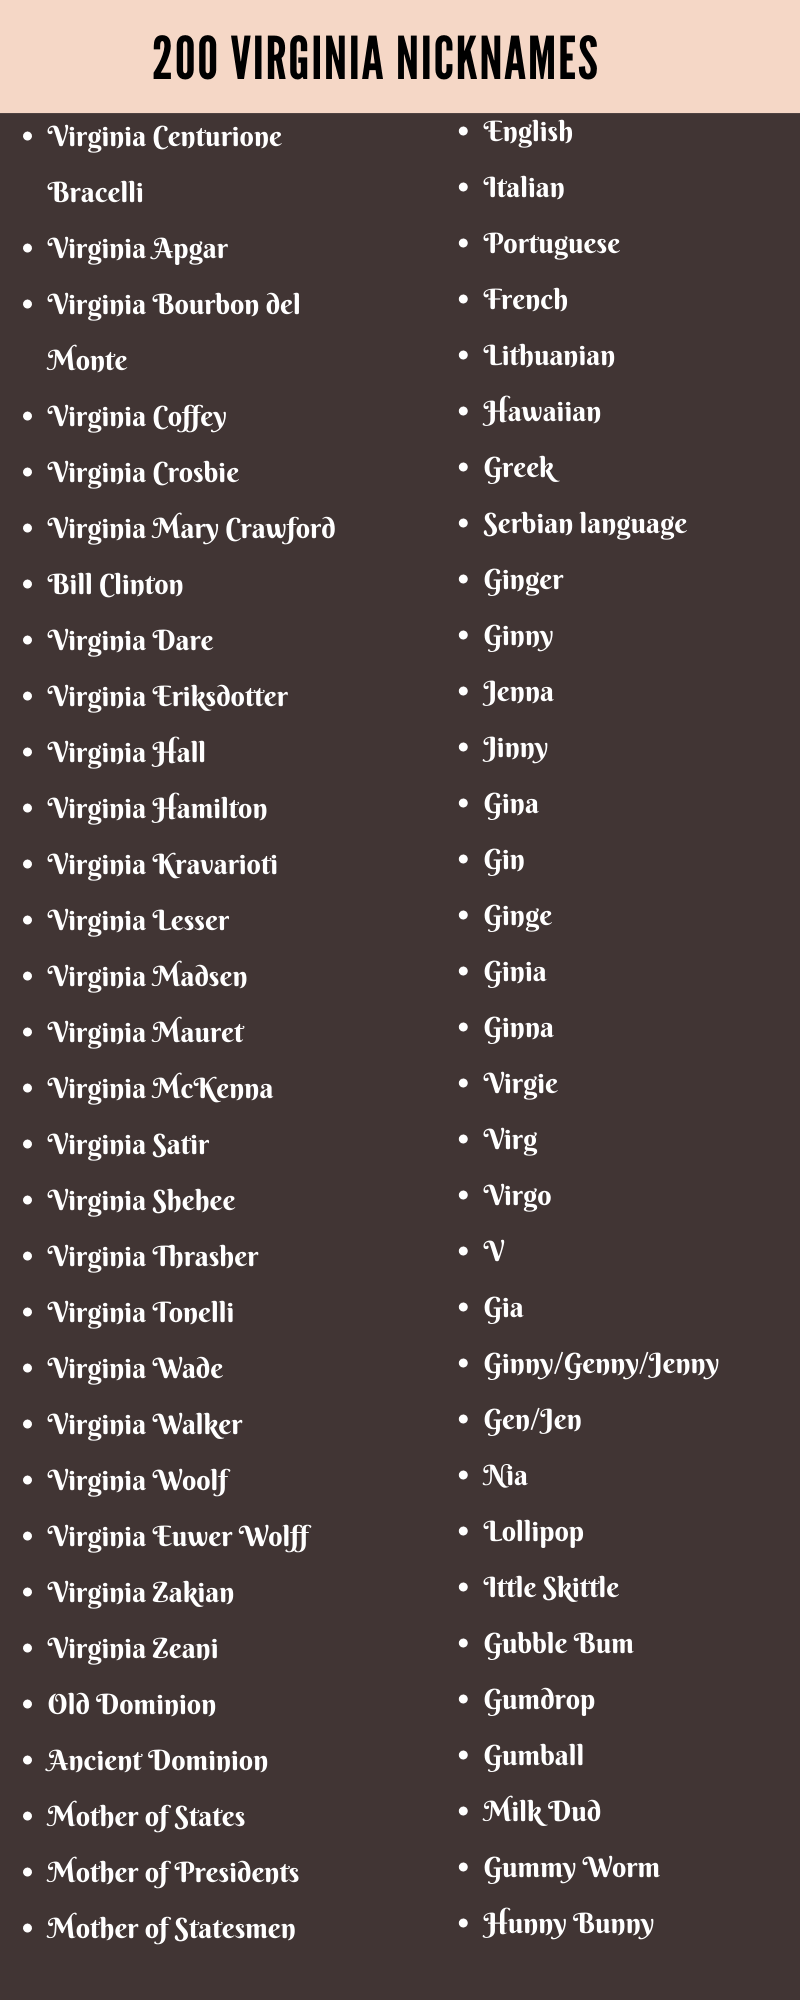 Virginia Nicknames